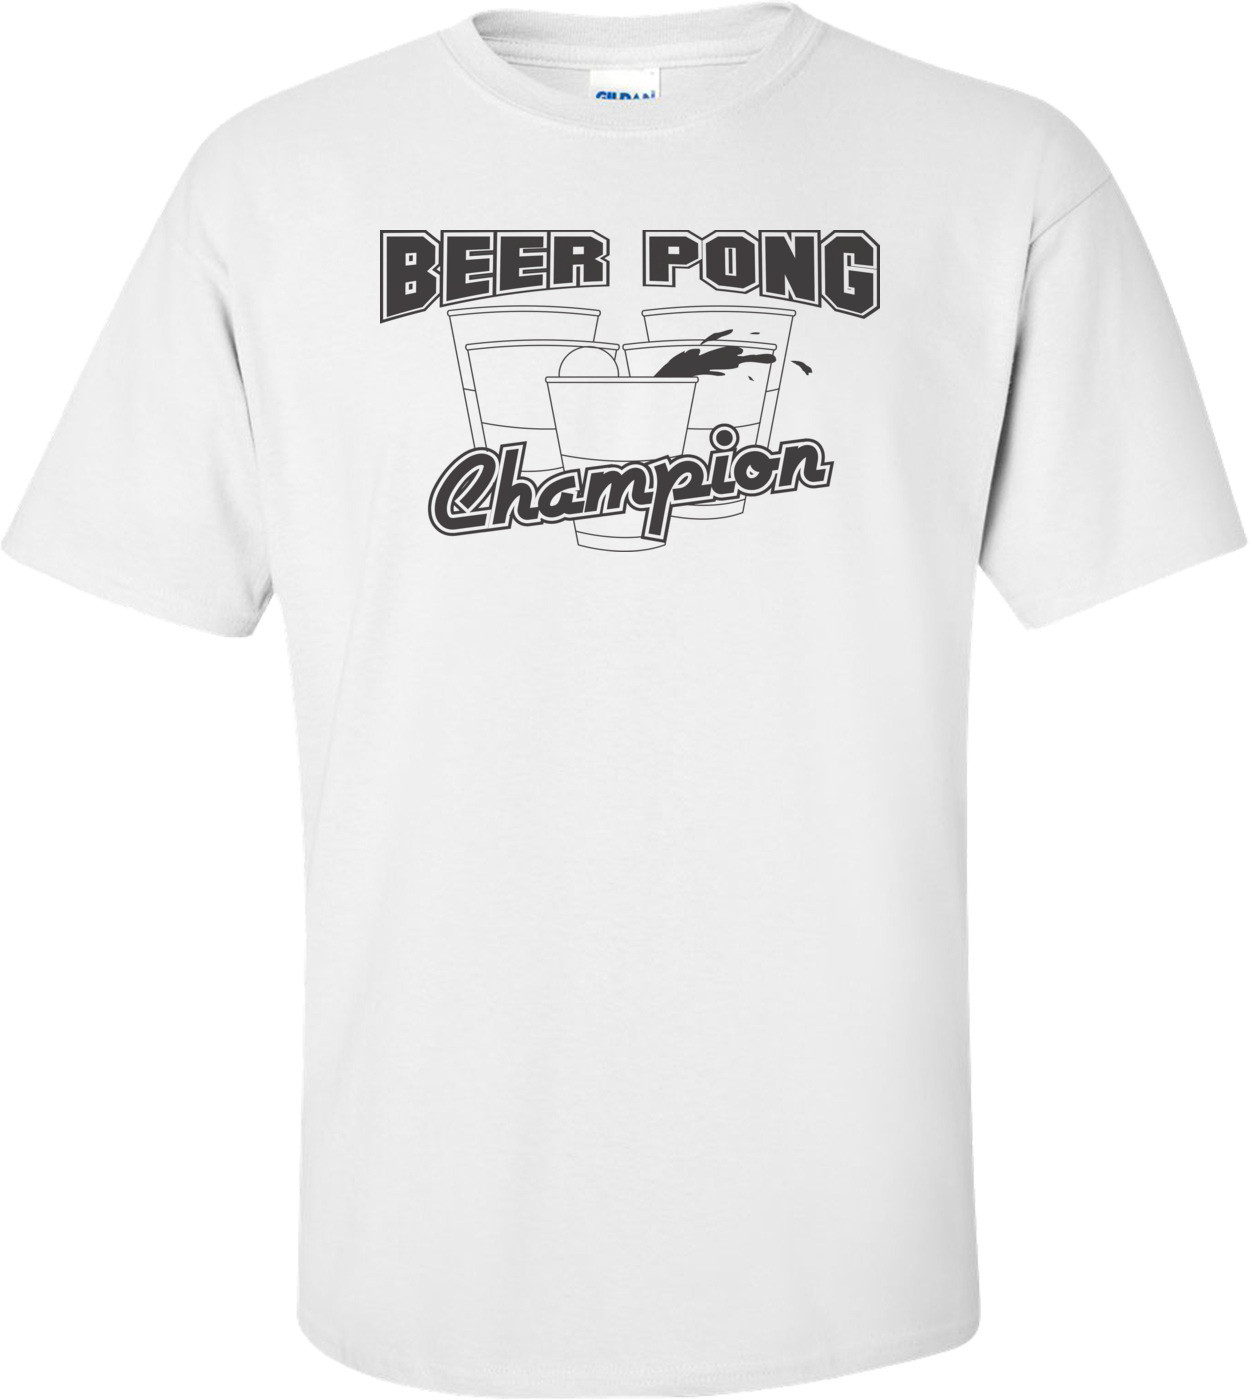 Beer Pong Champ T-shirt